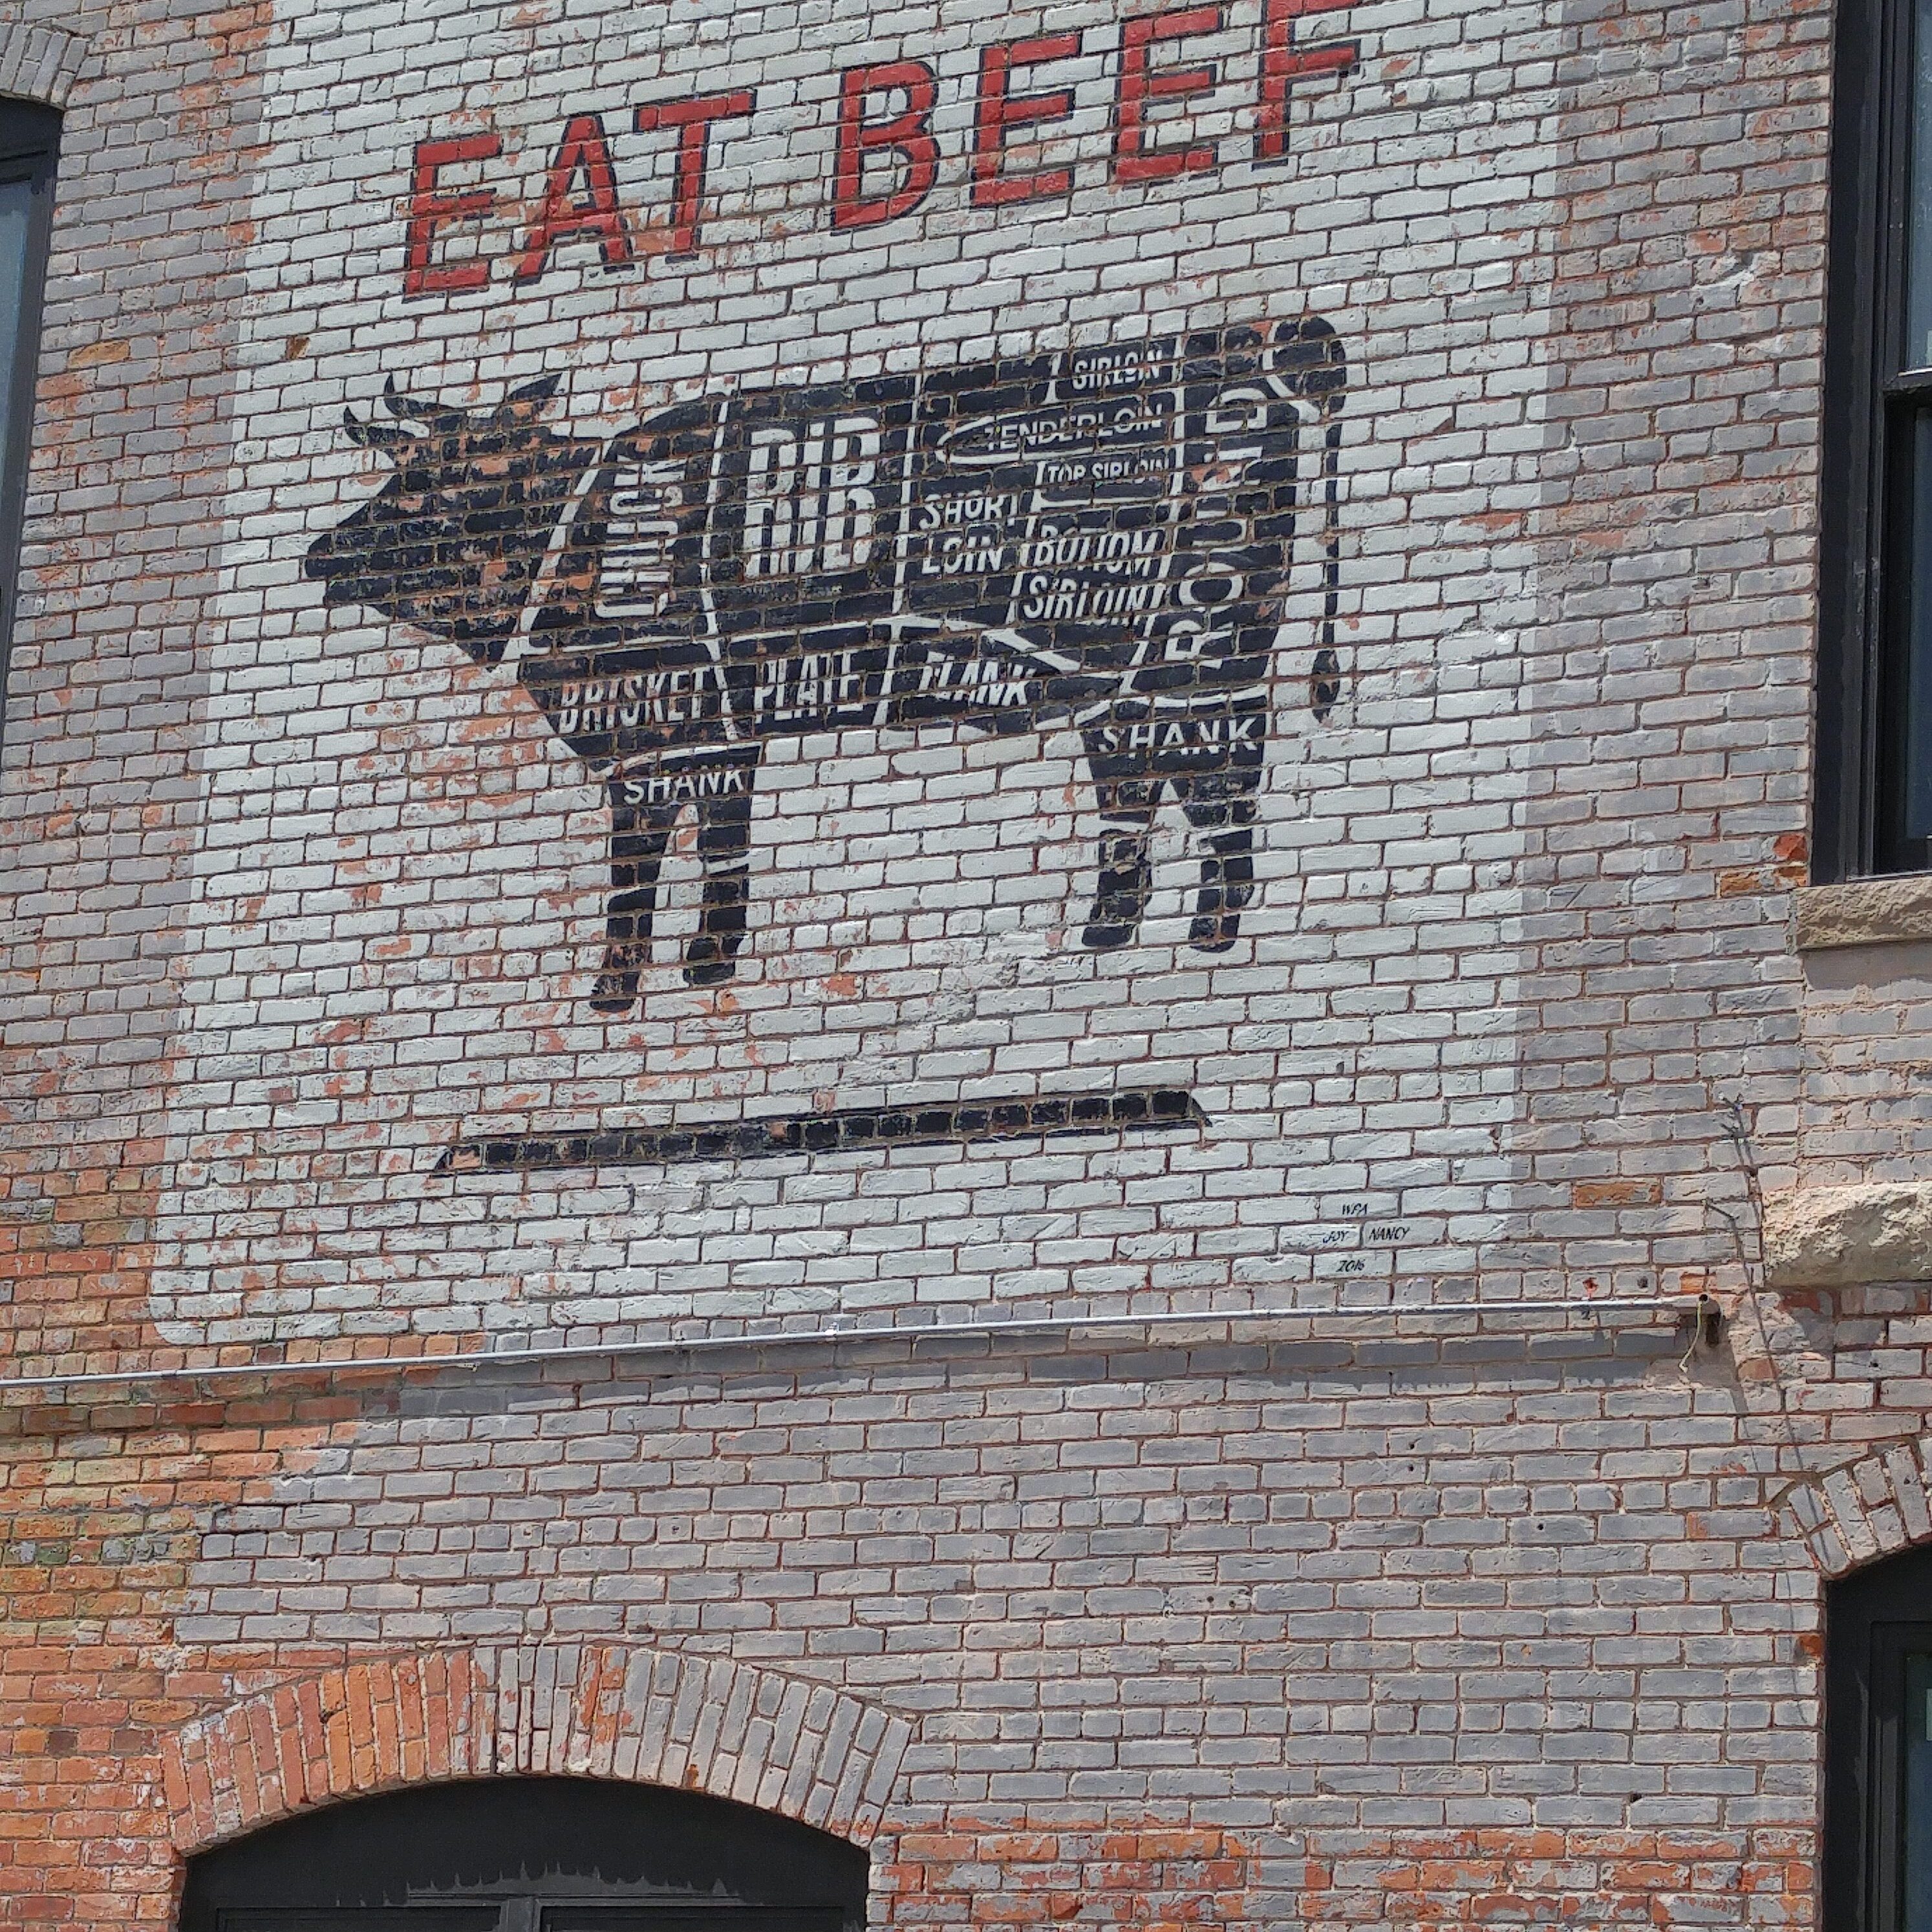 "Eat Beef", Grand Island, NE